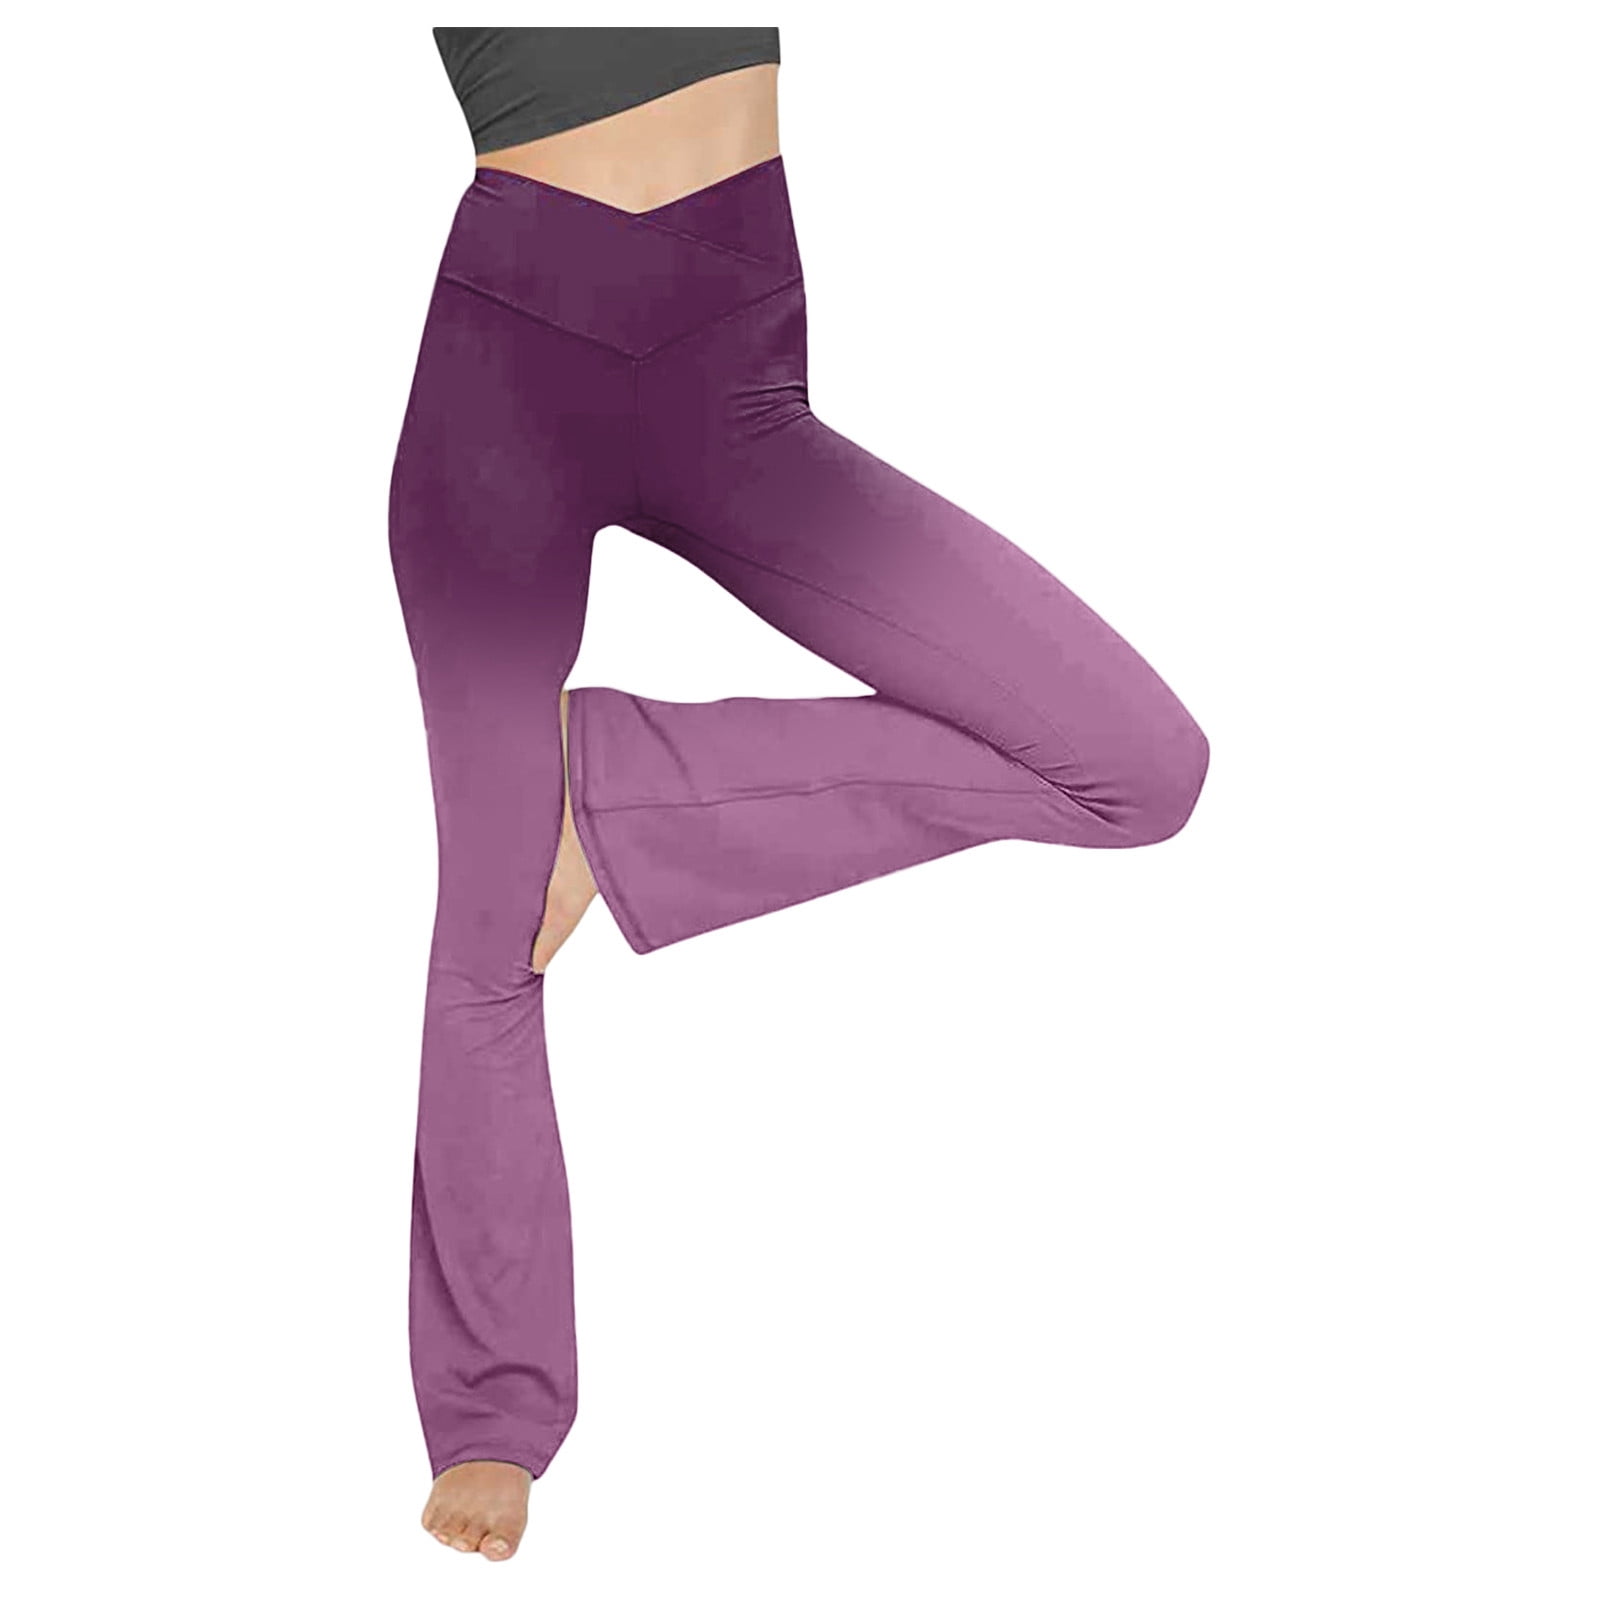 Dtydtpe Yoga Pants, Women's Print Workout Pants Tummy Control